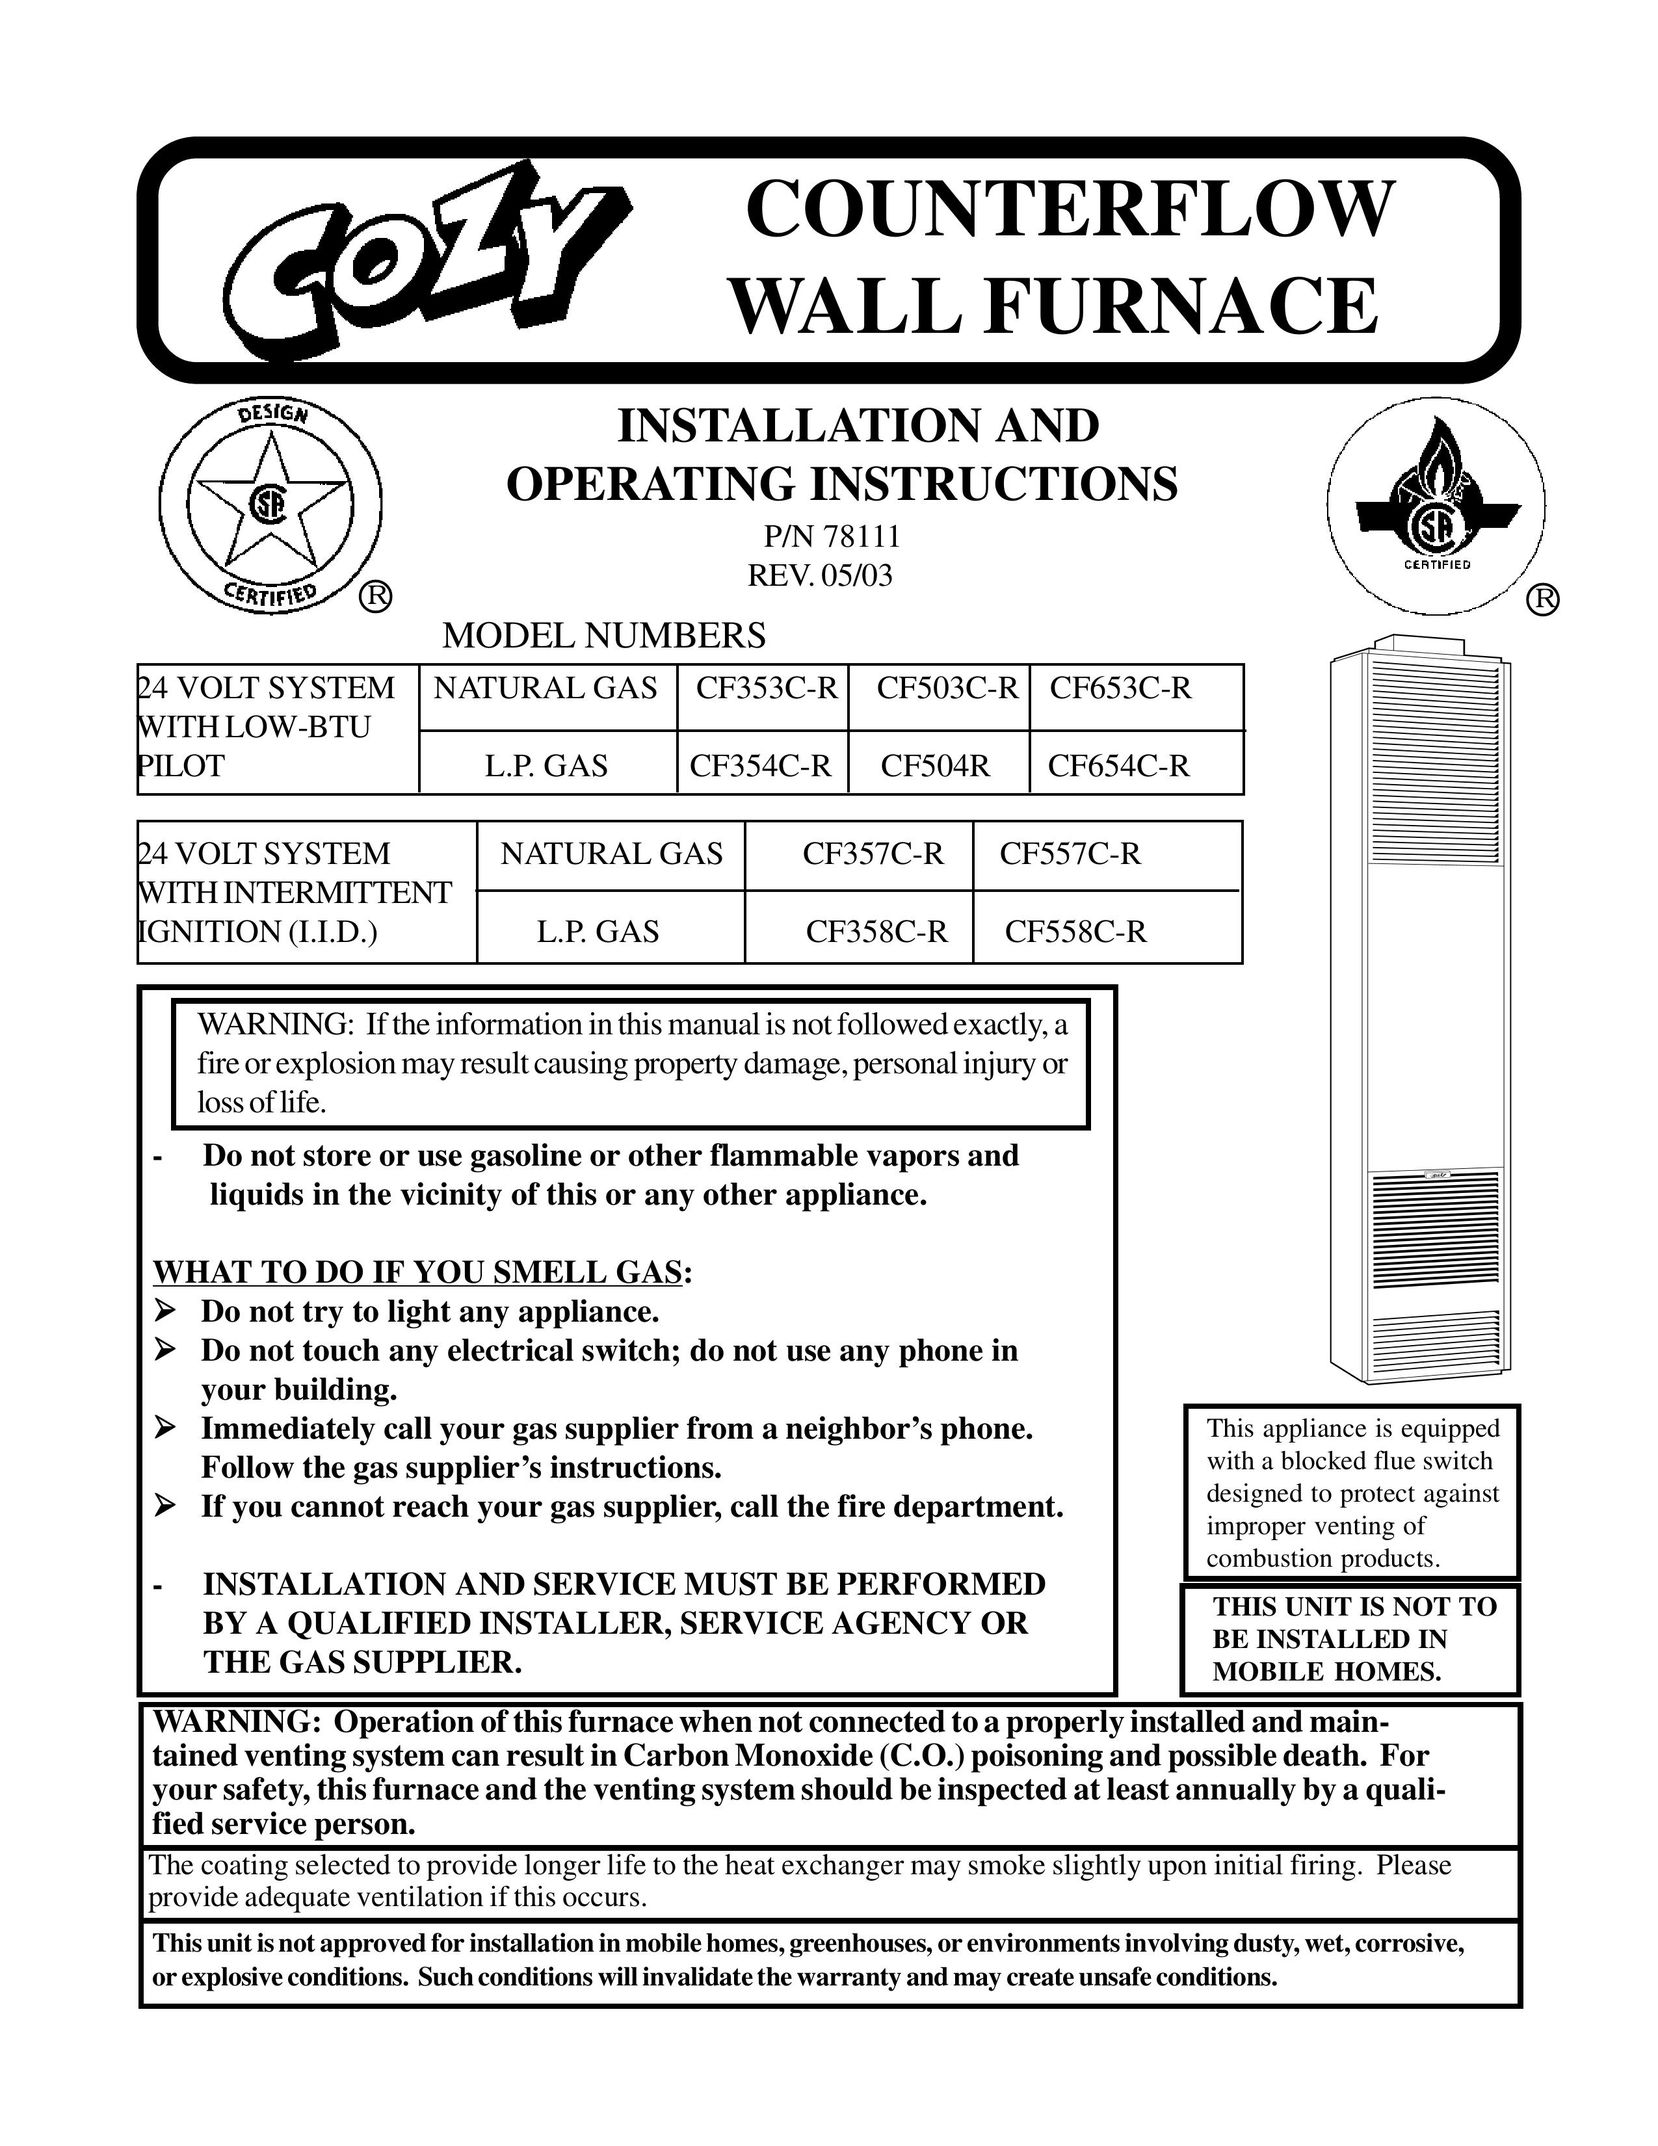 Louisville Tin and Stove CF654C-R Furnace User Manual